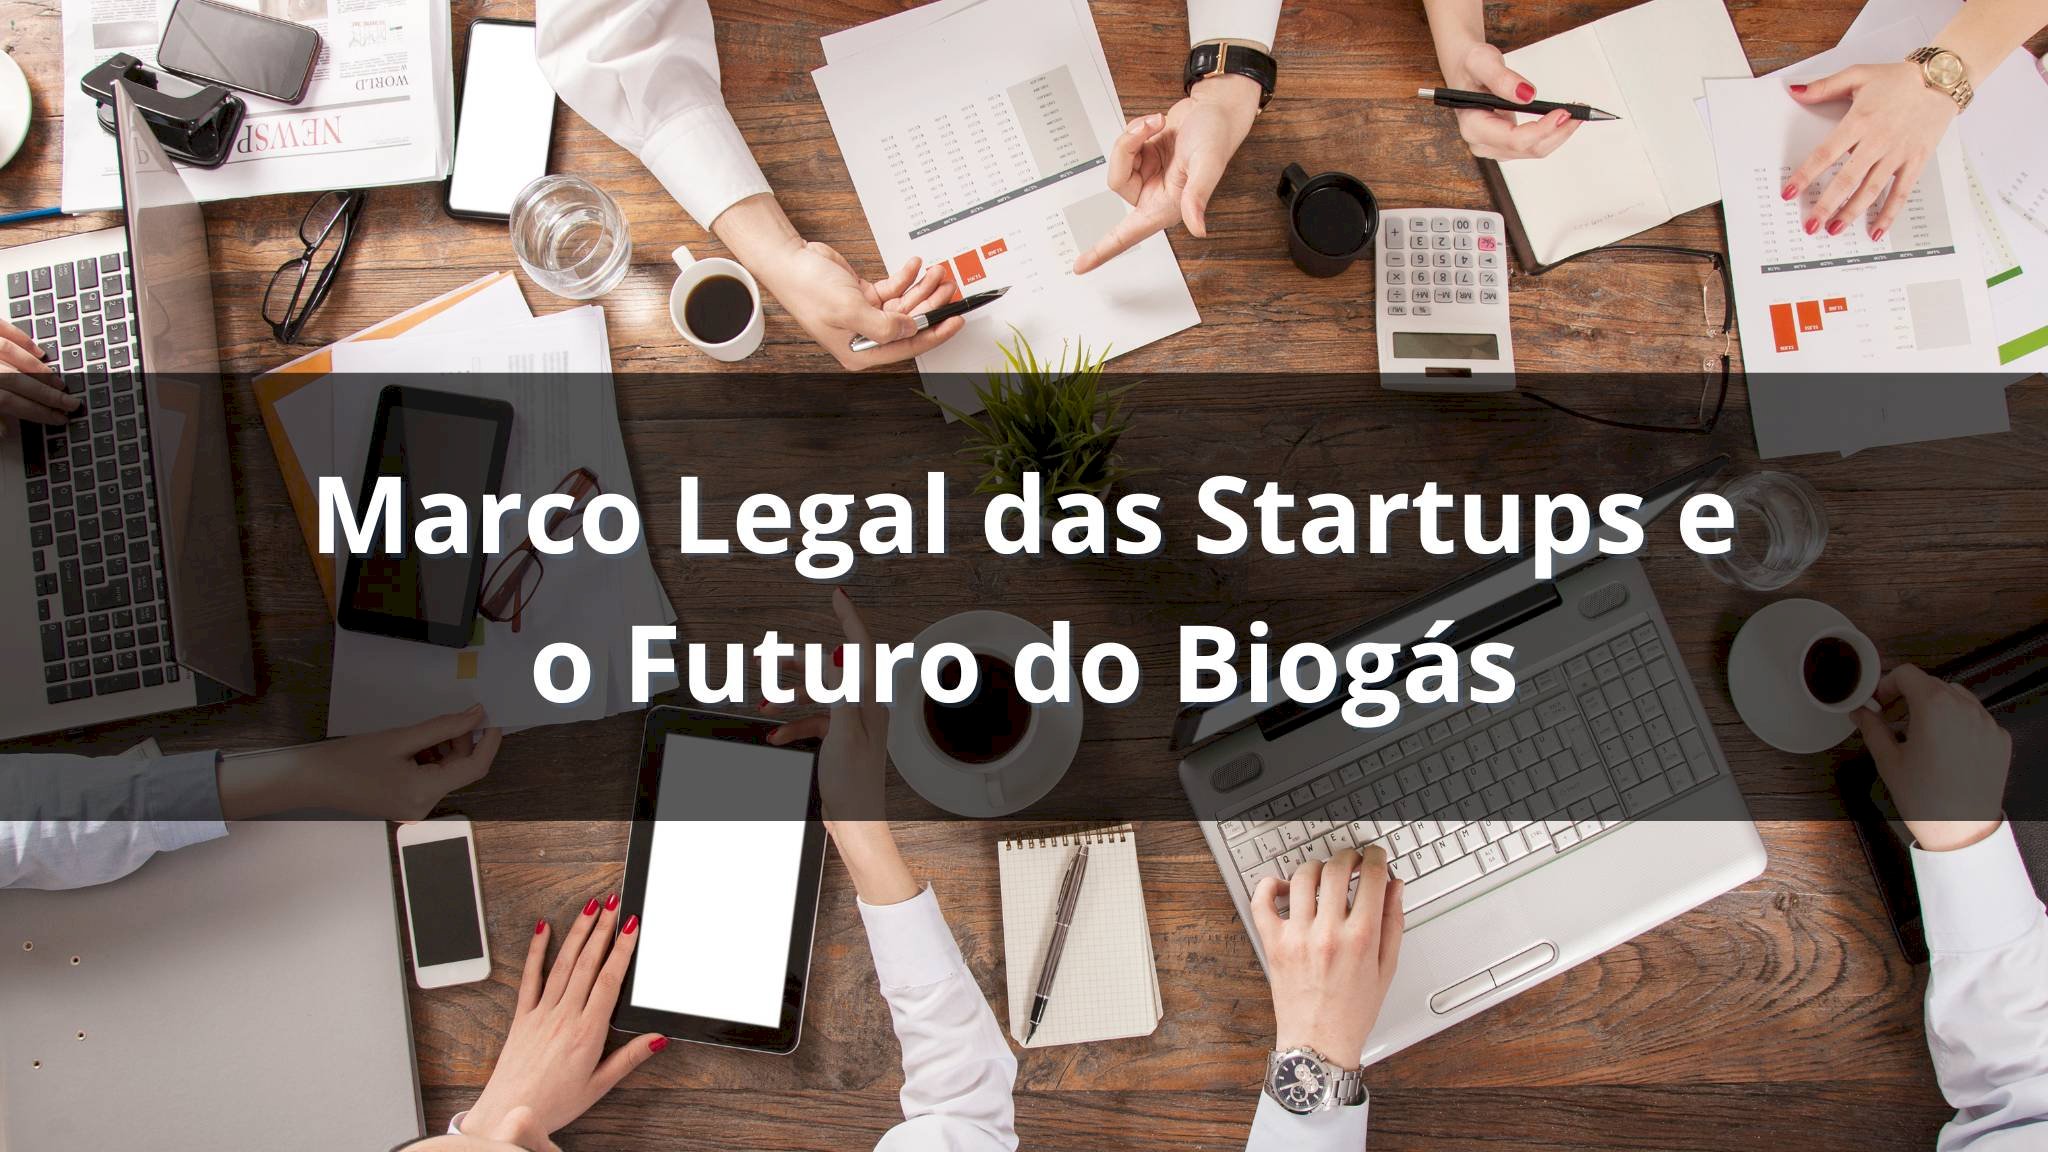 Marco Legal das Startups e o Futuro do Biogás